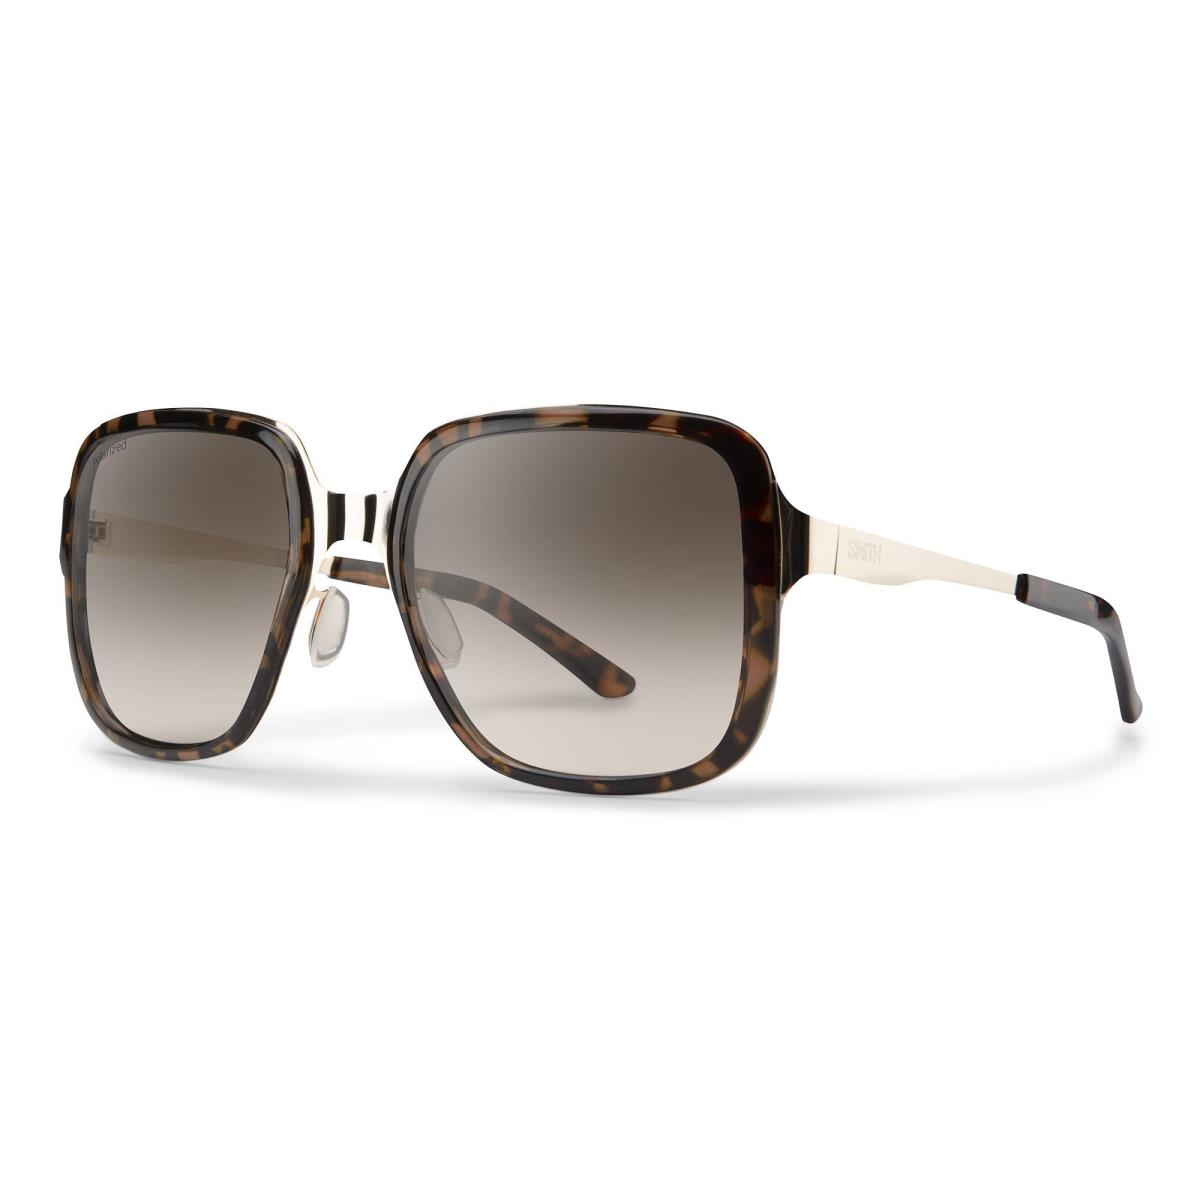 Smith Aveline Sunglasses Sunglasses Tortoise / Polarized Brown Gradient